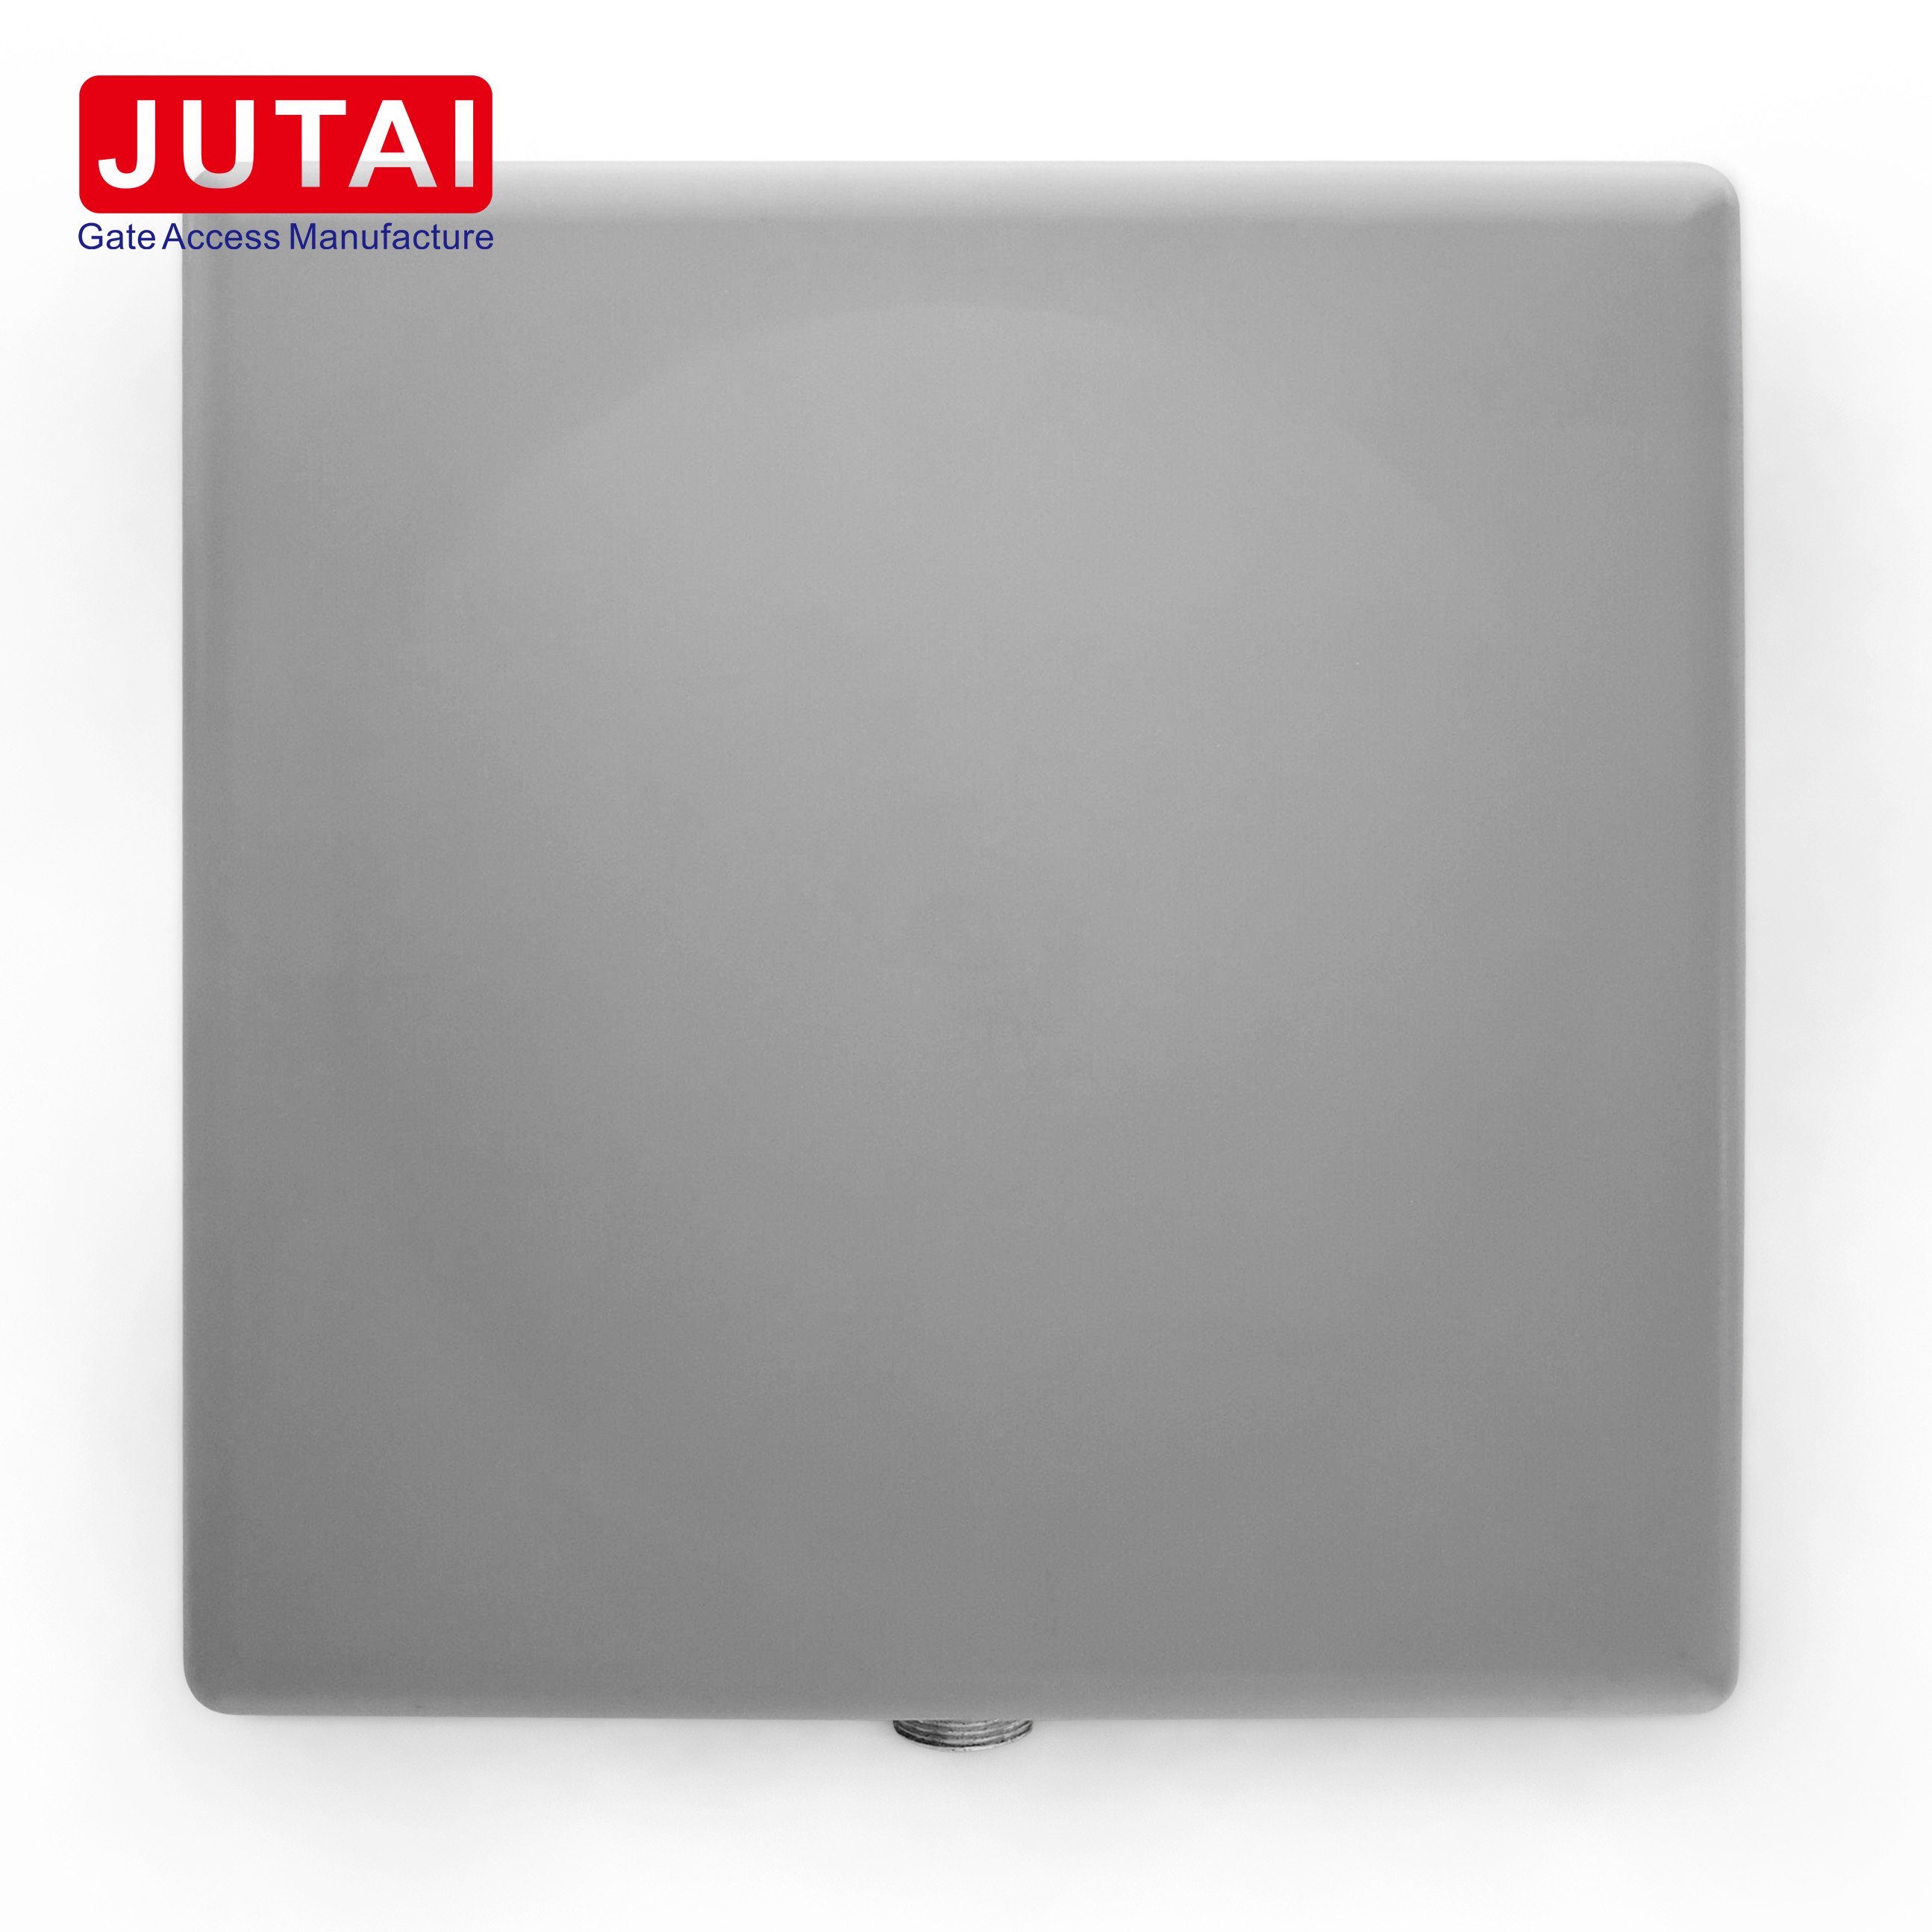 JUTAI Long Range 2.45G RFID Active Reader Convenient of Handsfree Parking System